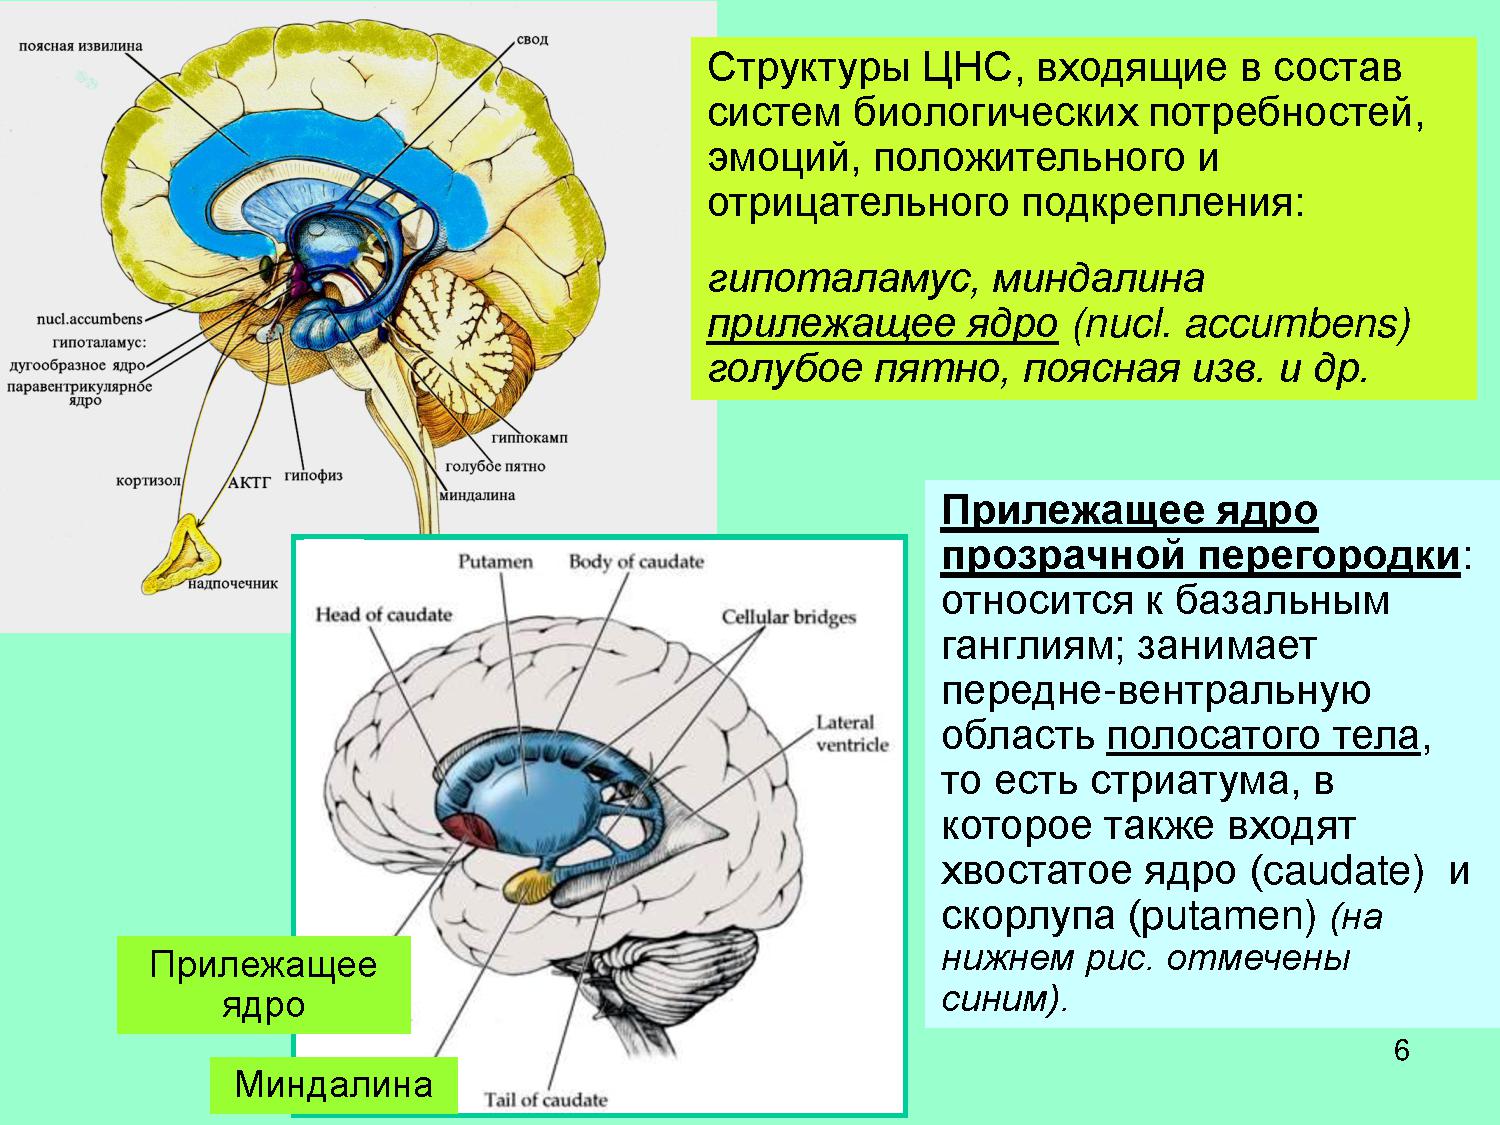 Хвостатое ядро мозга. Прилежащее ядро головного мозга. Прилежащее ядро прозрачной перегородки. Хвостатое ядро мозга строение. Функции хвостатого ядра головного мозга.